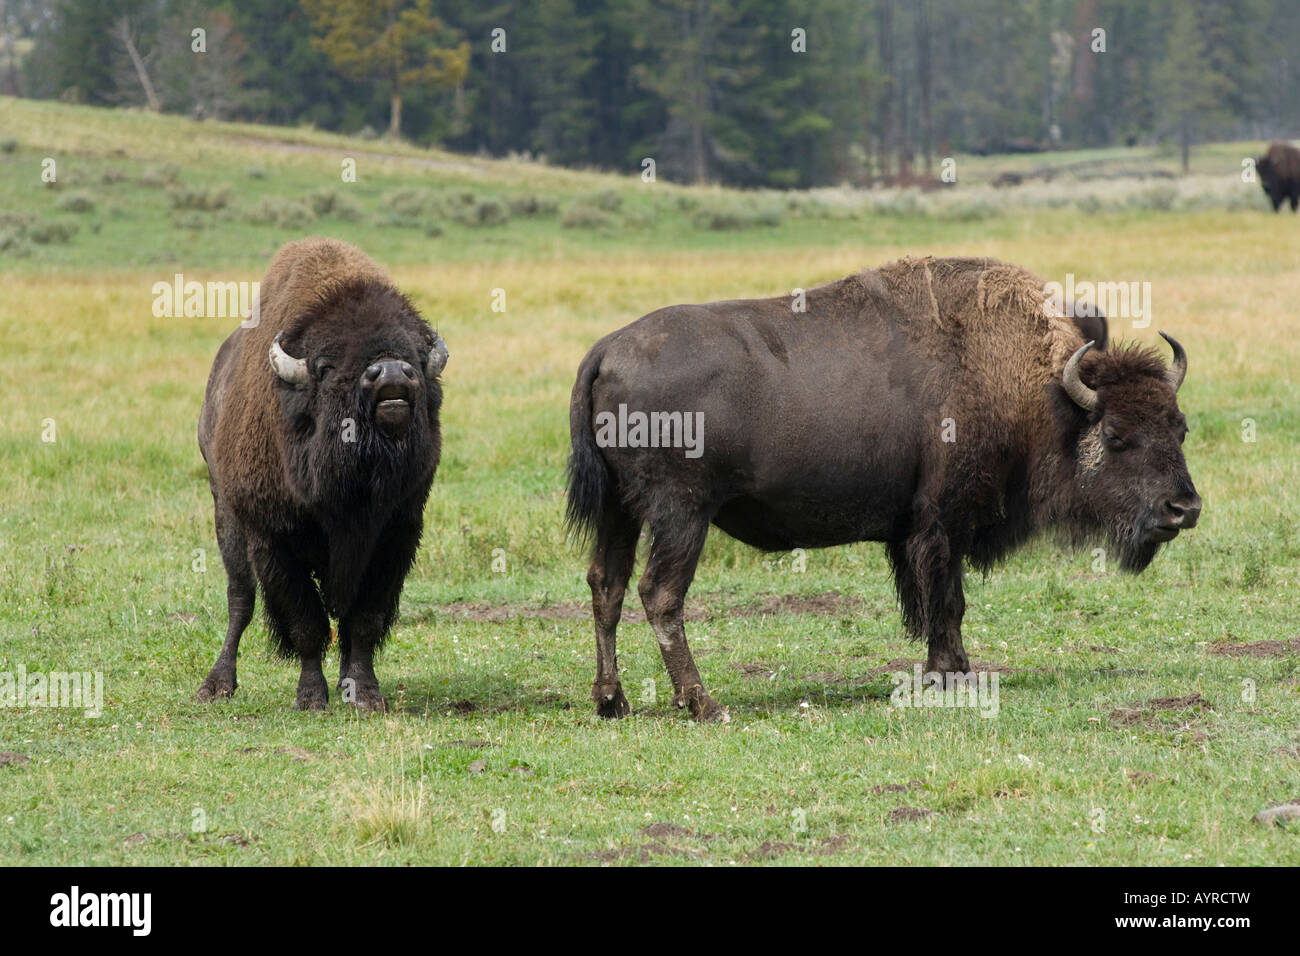 American Buffaloes (Bison bison), flehmen response, Yellowstone National Park, Wyoming, USA Stock Photo